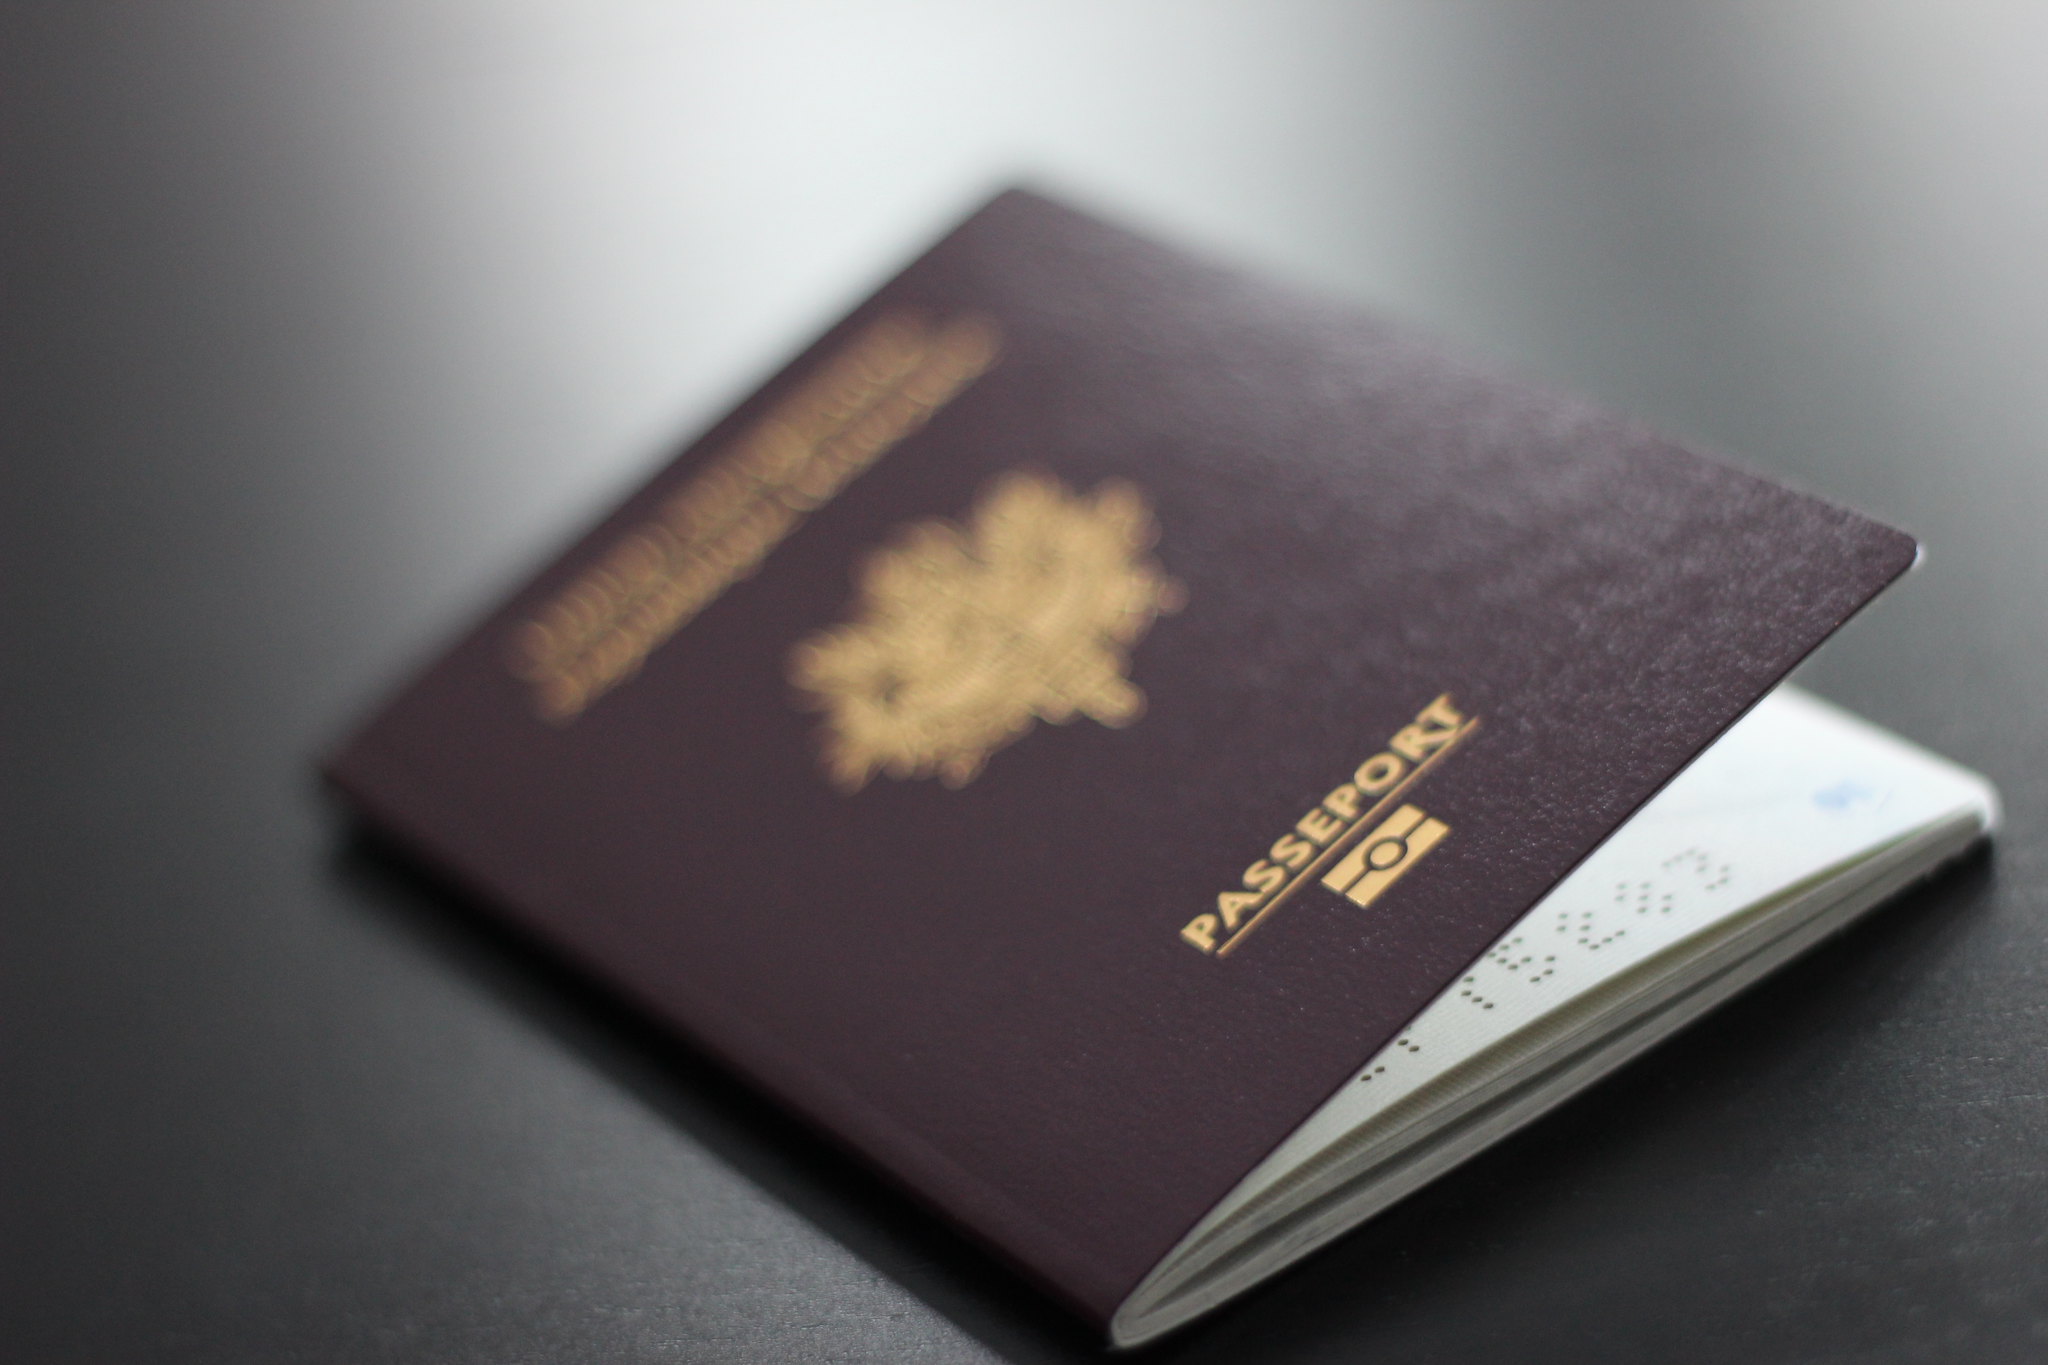 Passport documents to enter Morocco